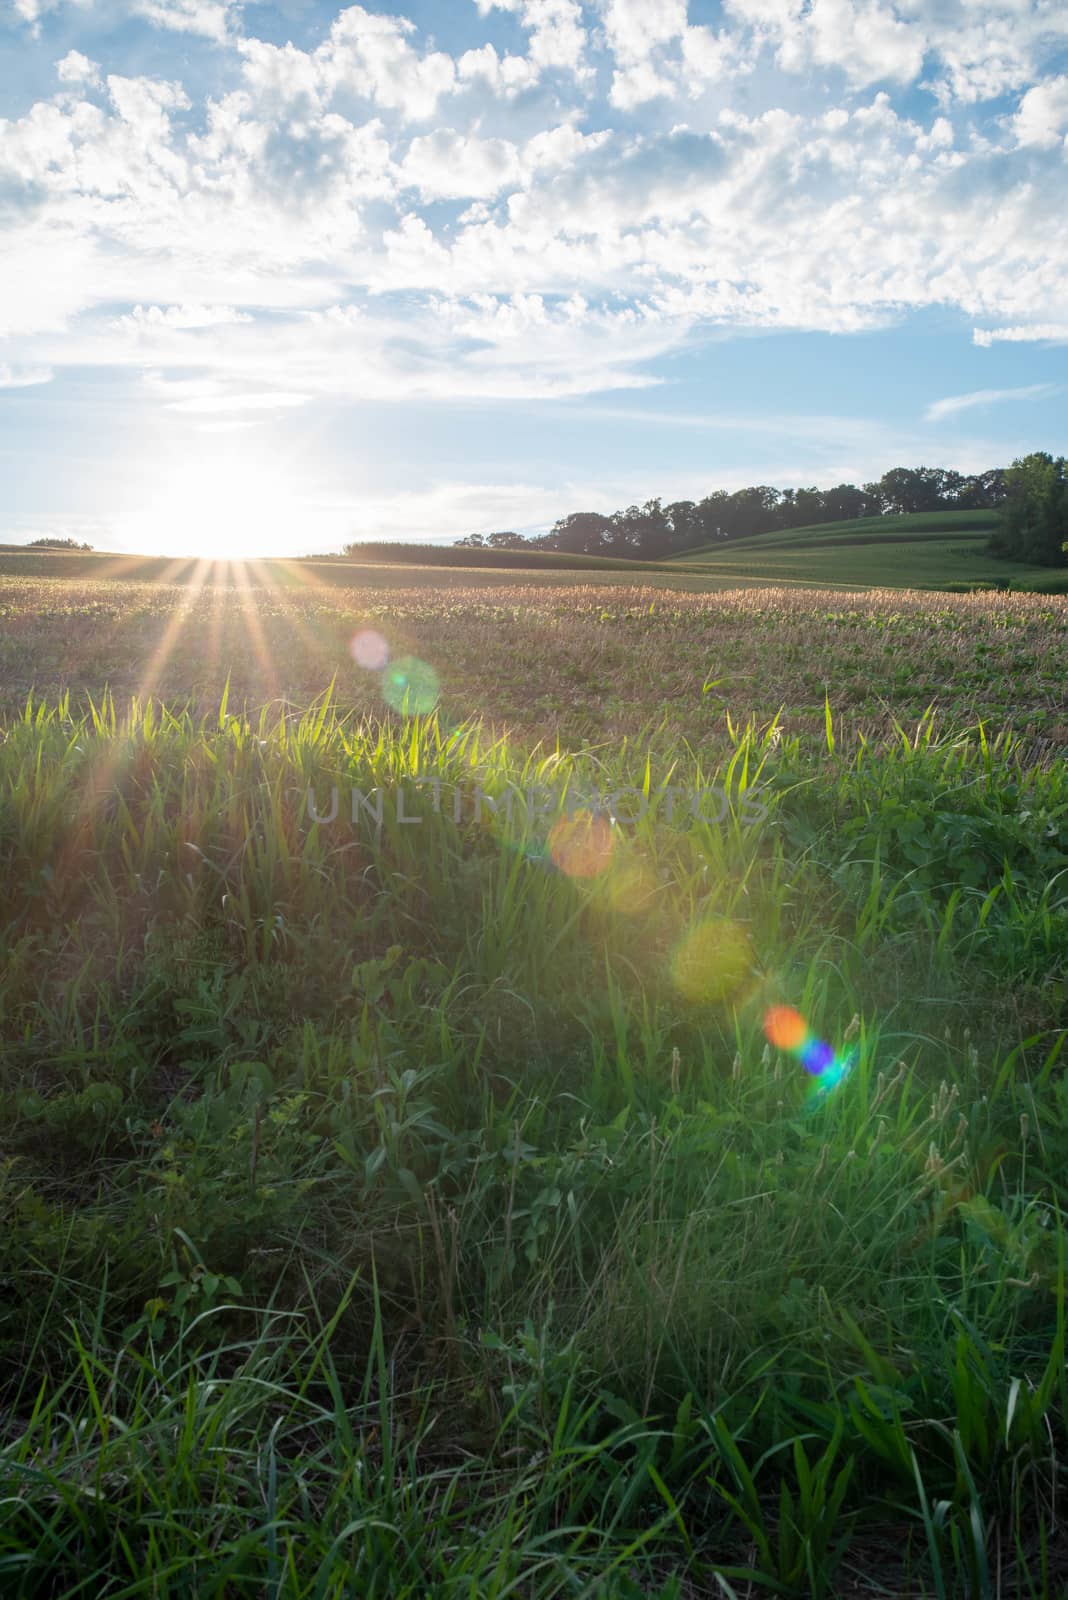 Sunbeam reaches across tranquil farm landscape by marysalen